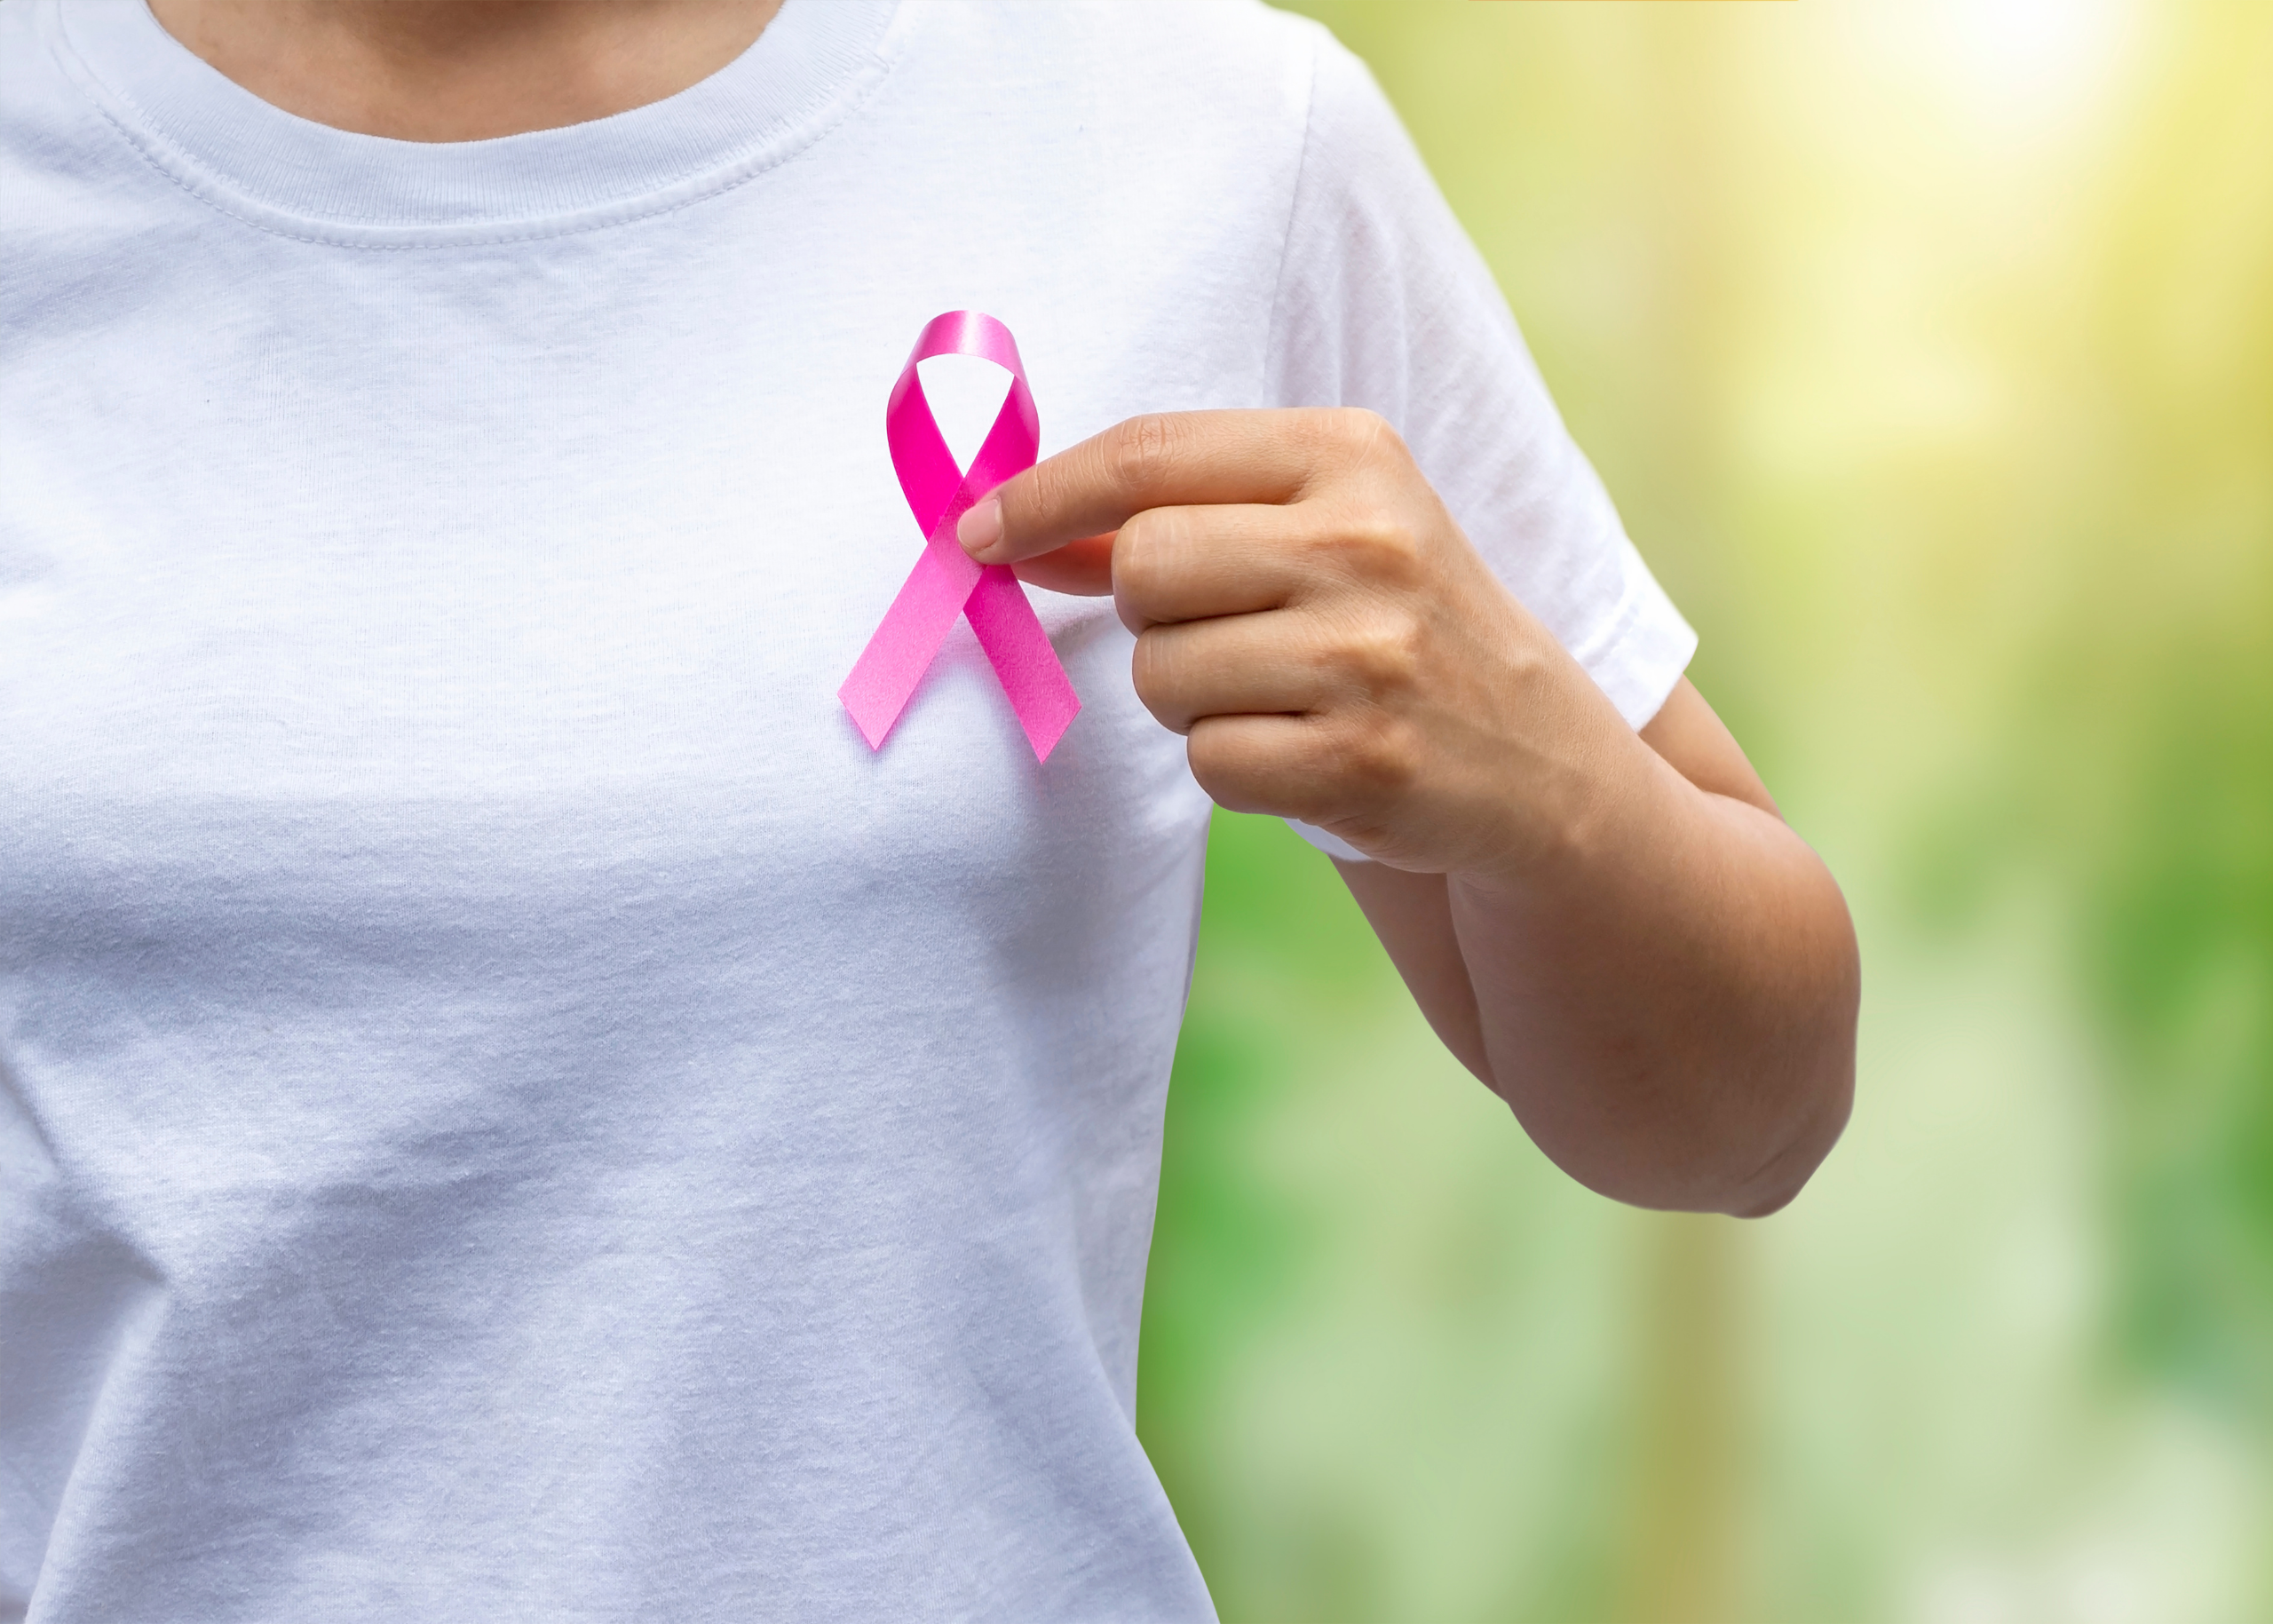 Triple-Negative Breast Cancer (TNBC):